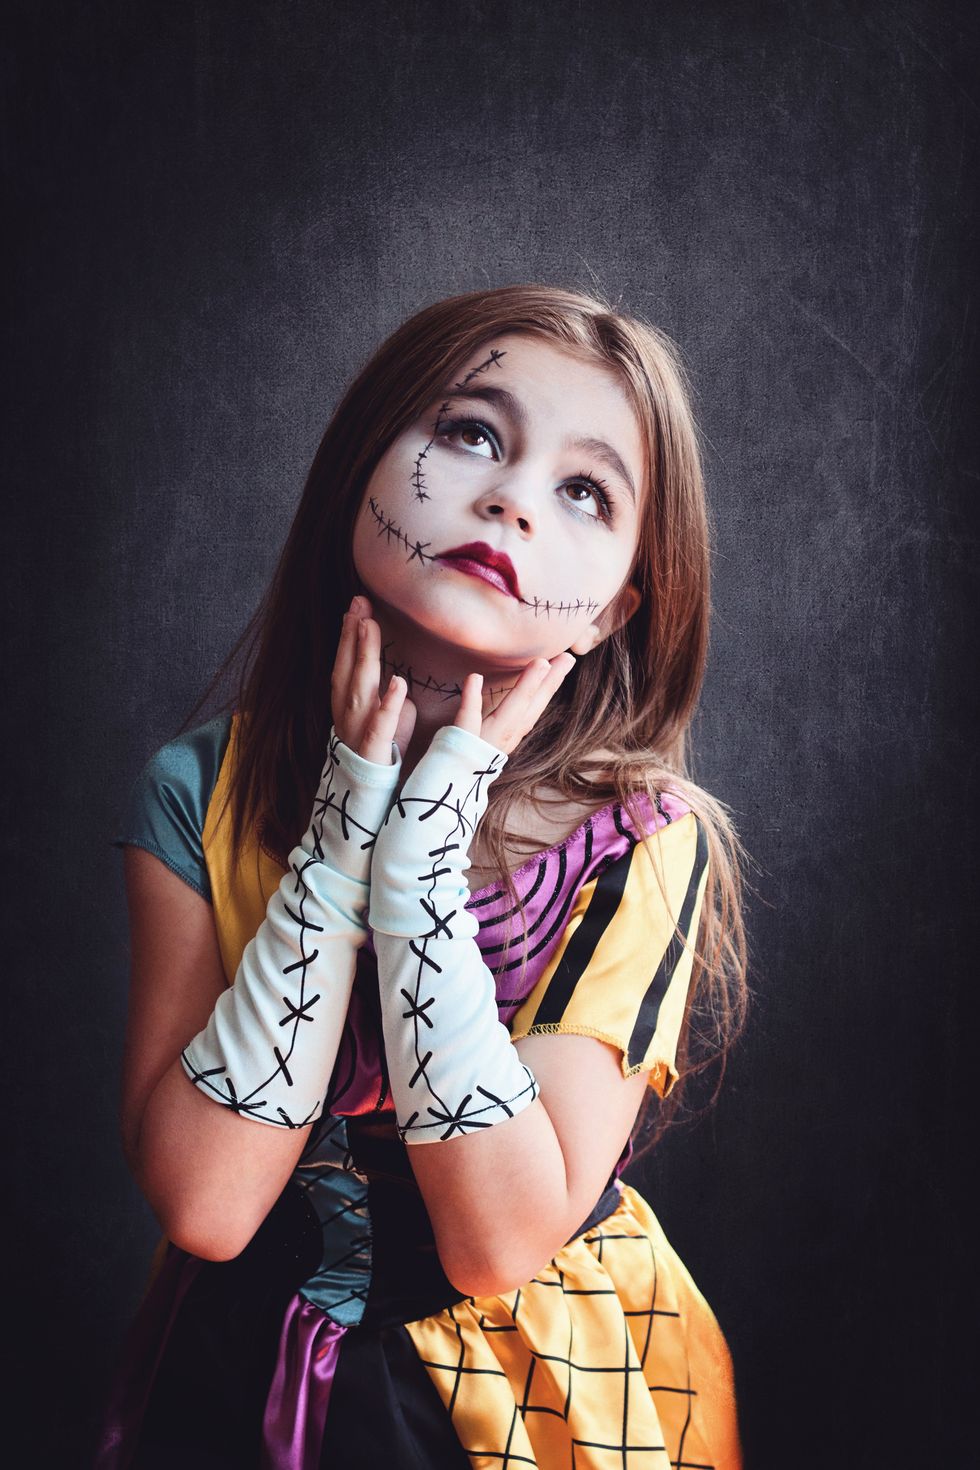 No Tricks! Treat yourself to some DIY Halloween Makeup Looks